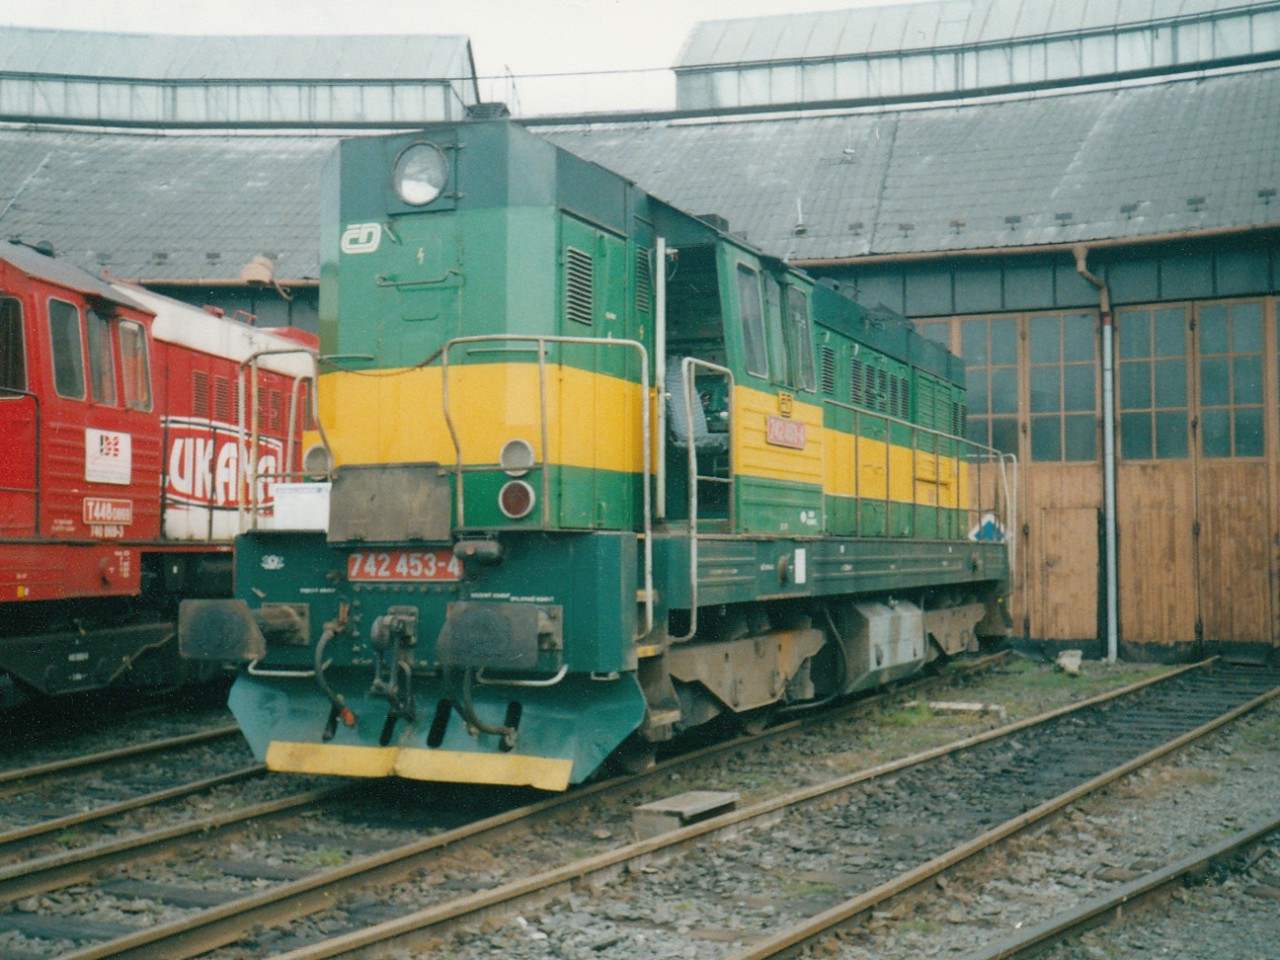 742 453-4 Olomouc 15.9.2001